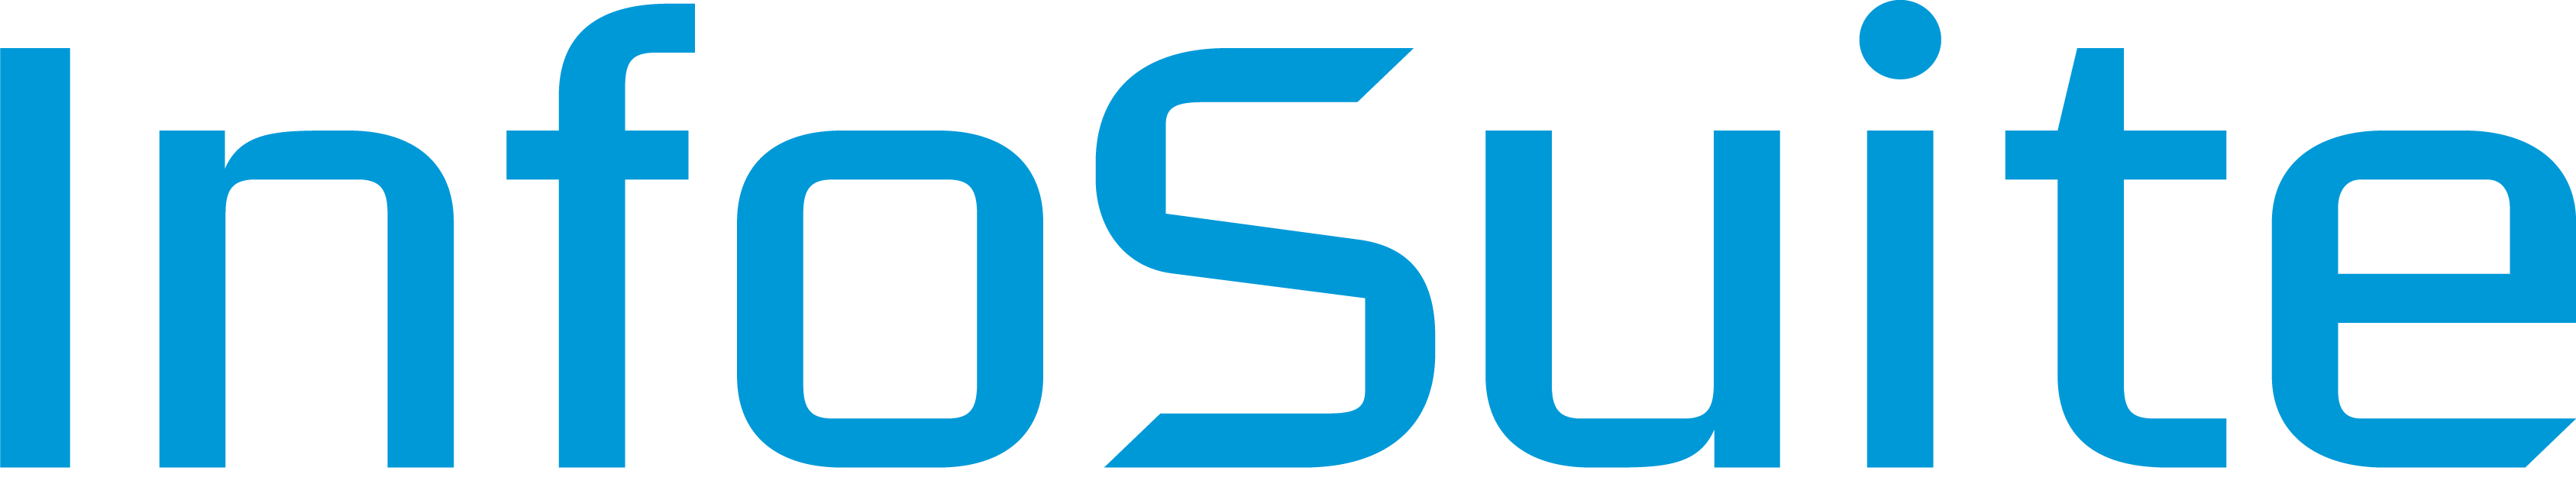 InfoSuite Logo